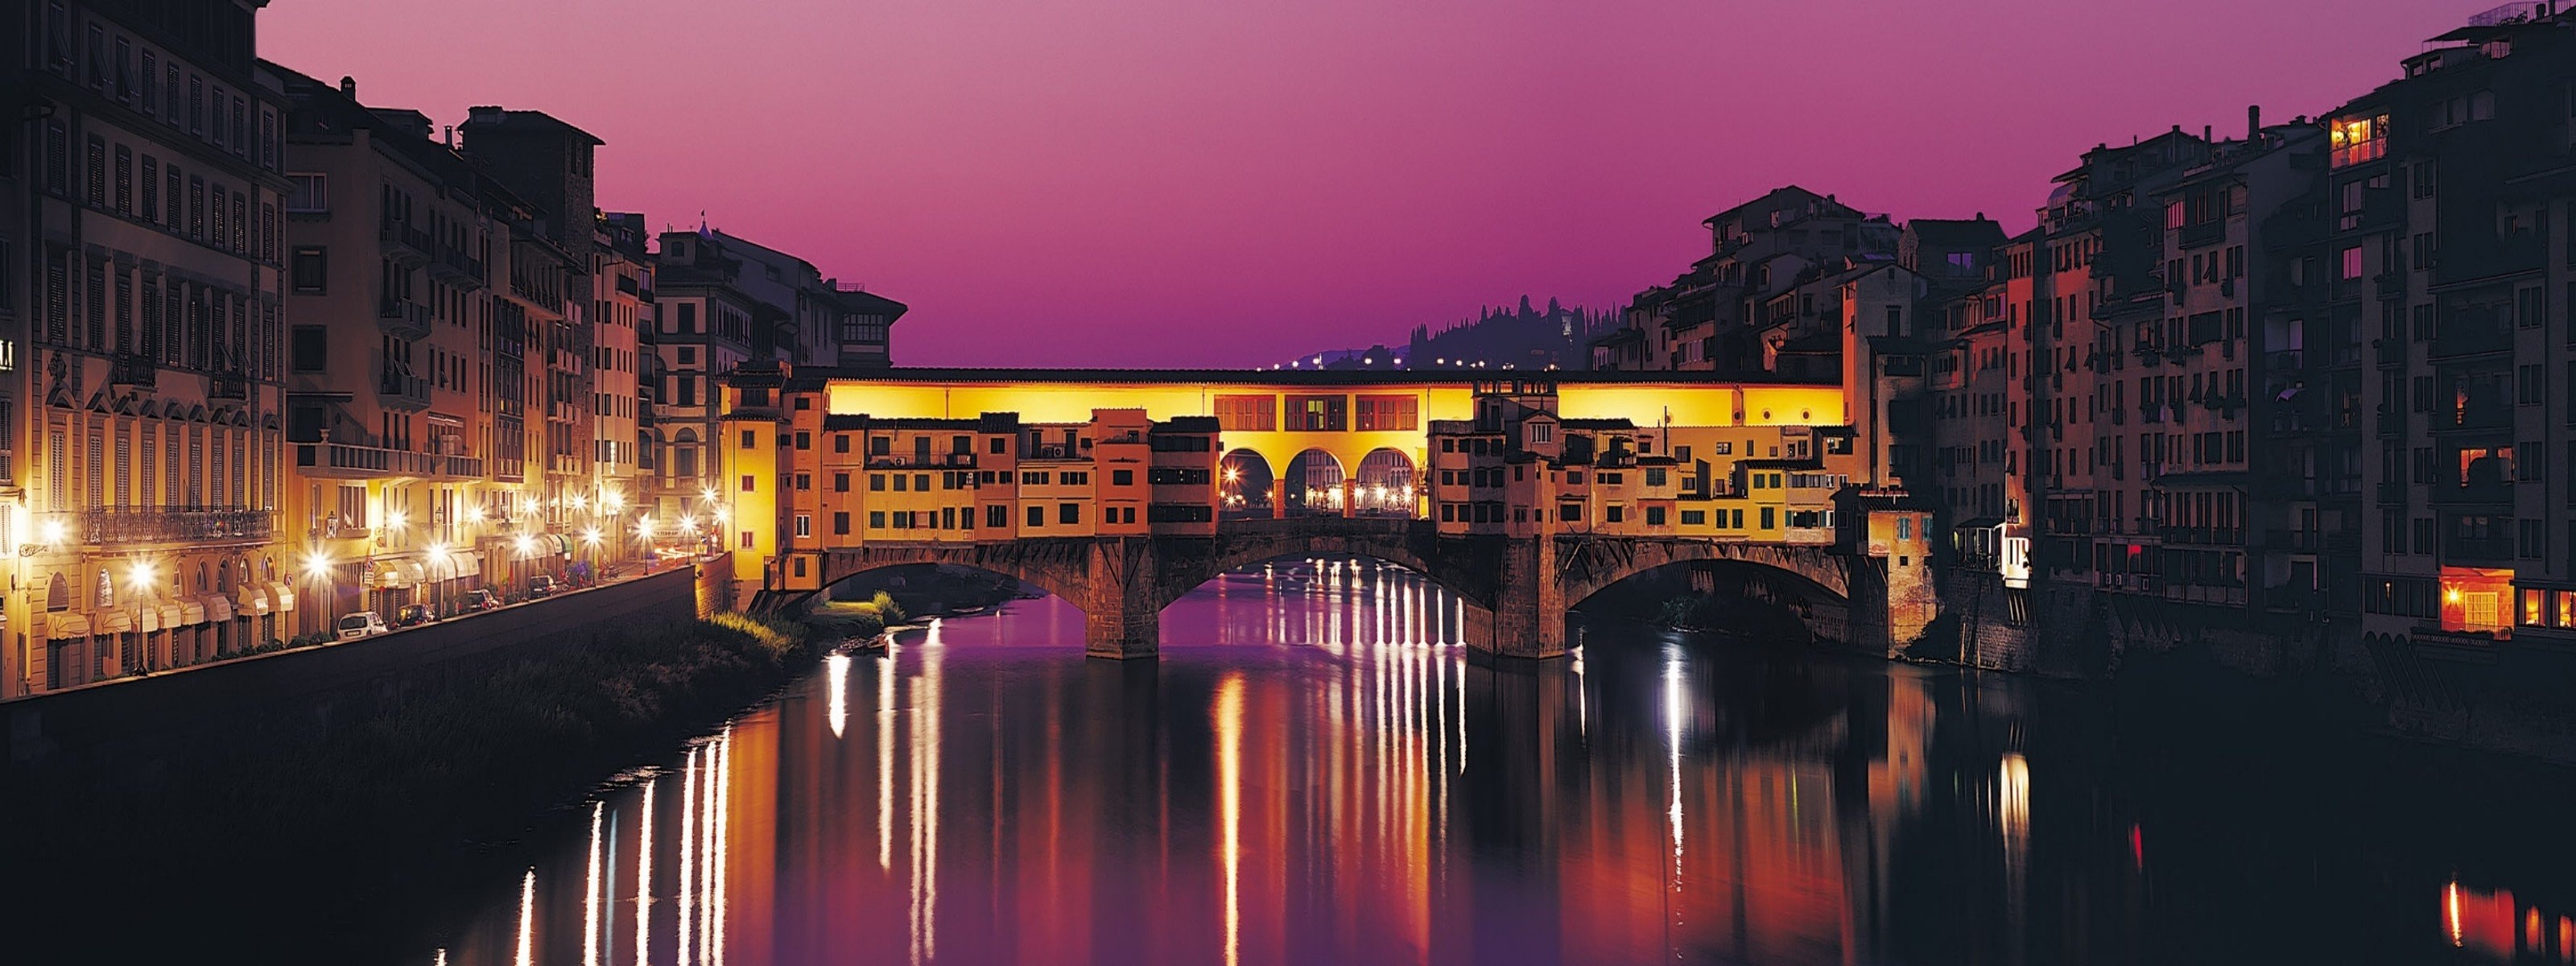 Ponte Vecchio, Bridges of Italy, Florence, Stunning reflections, 3200x1200 Dual Screen Desktop